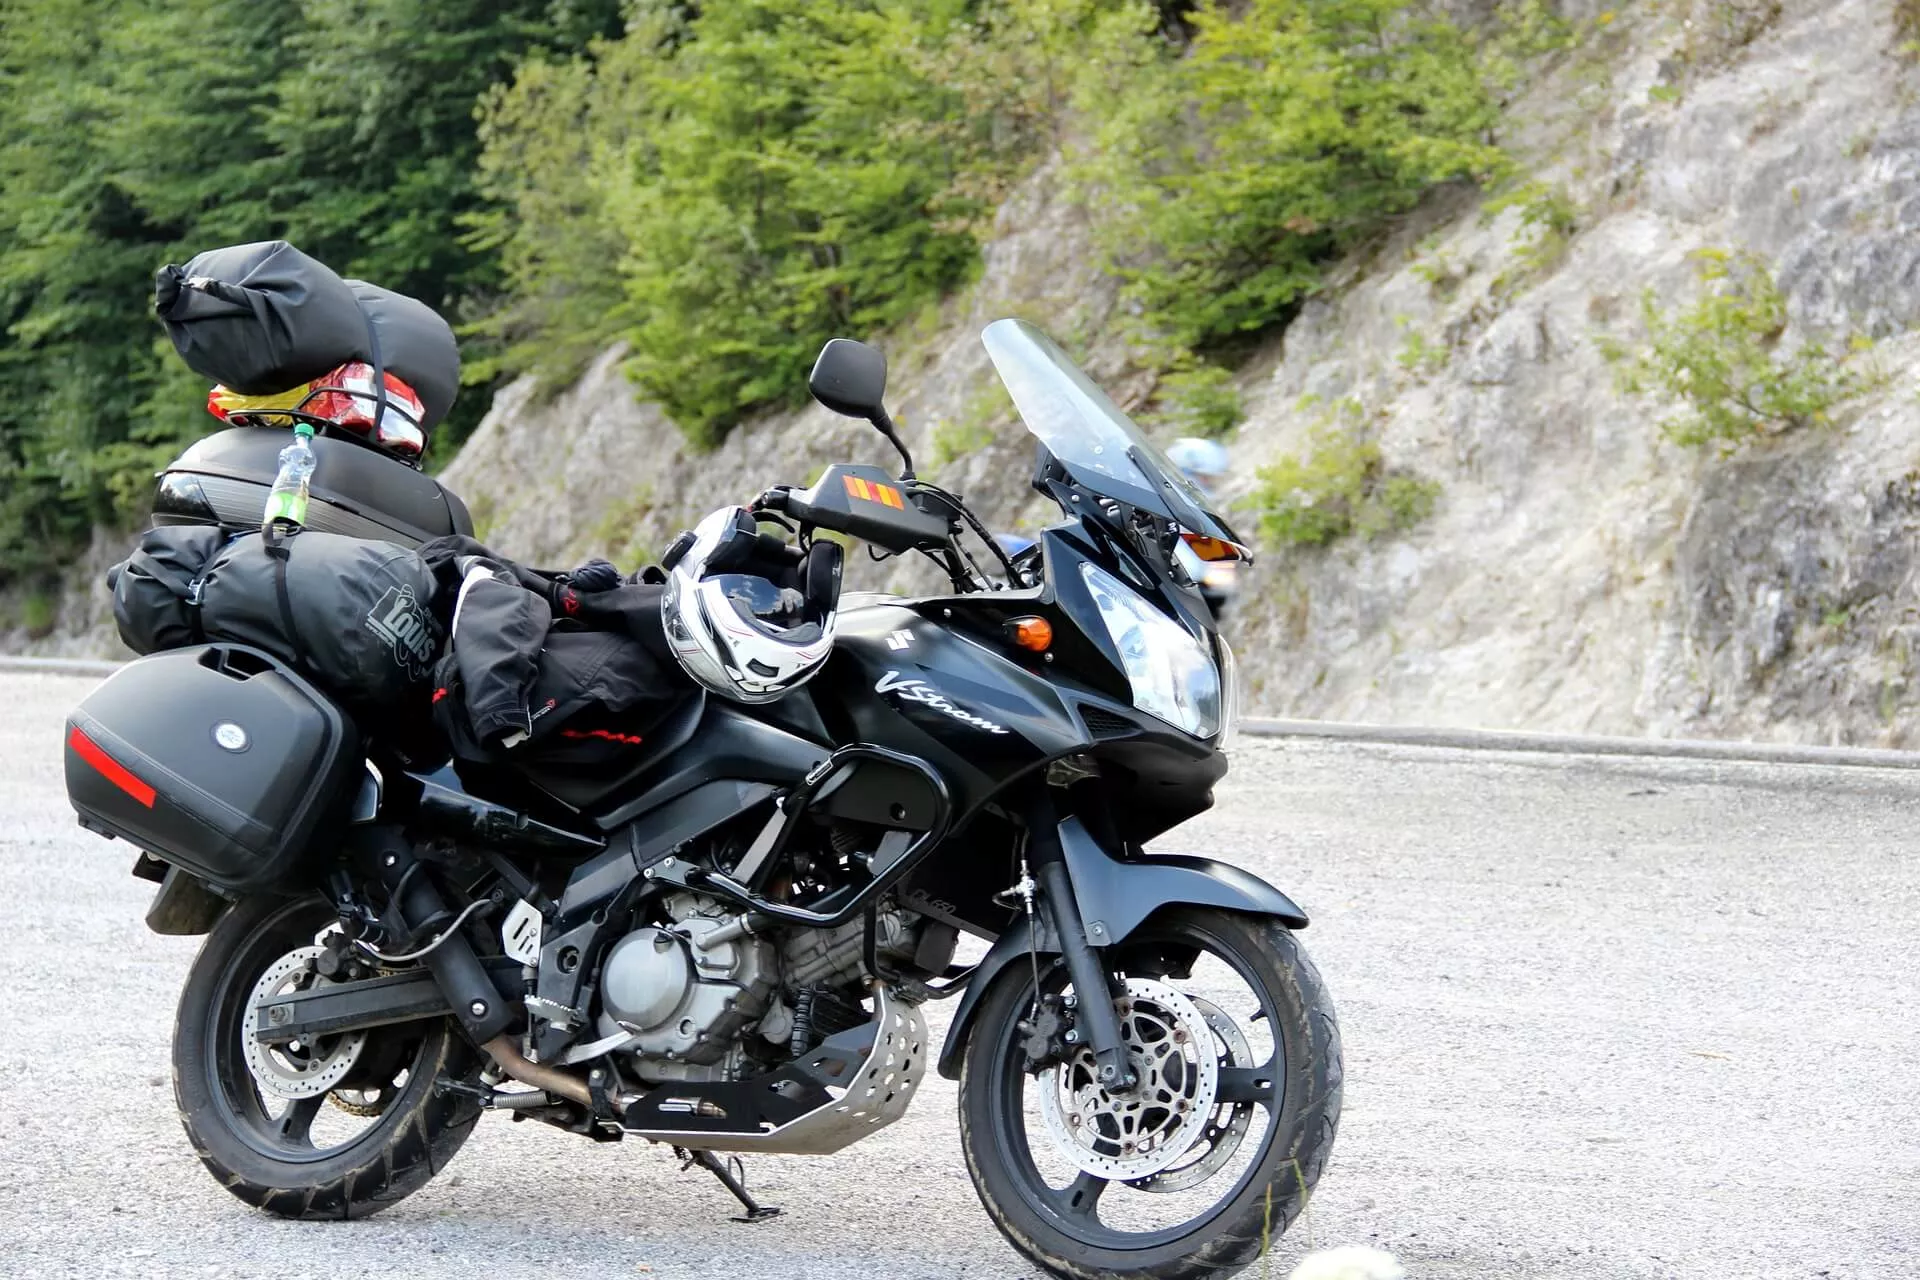 Motorbike Rental - Europe in Czech Republic, Europe | Motorcycles - Rated 0.9